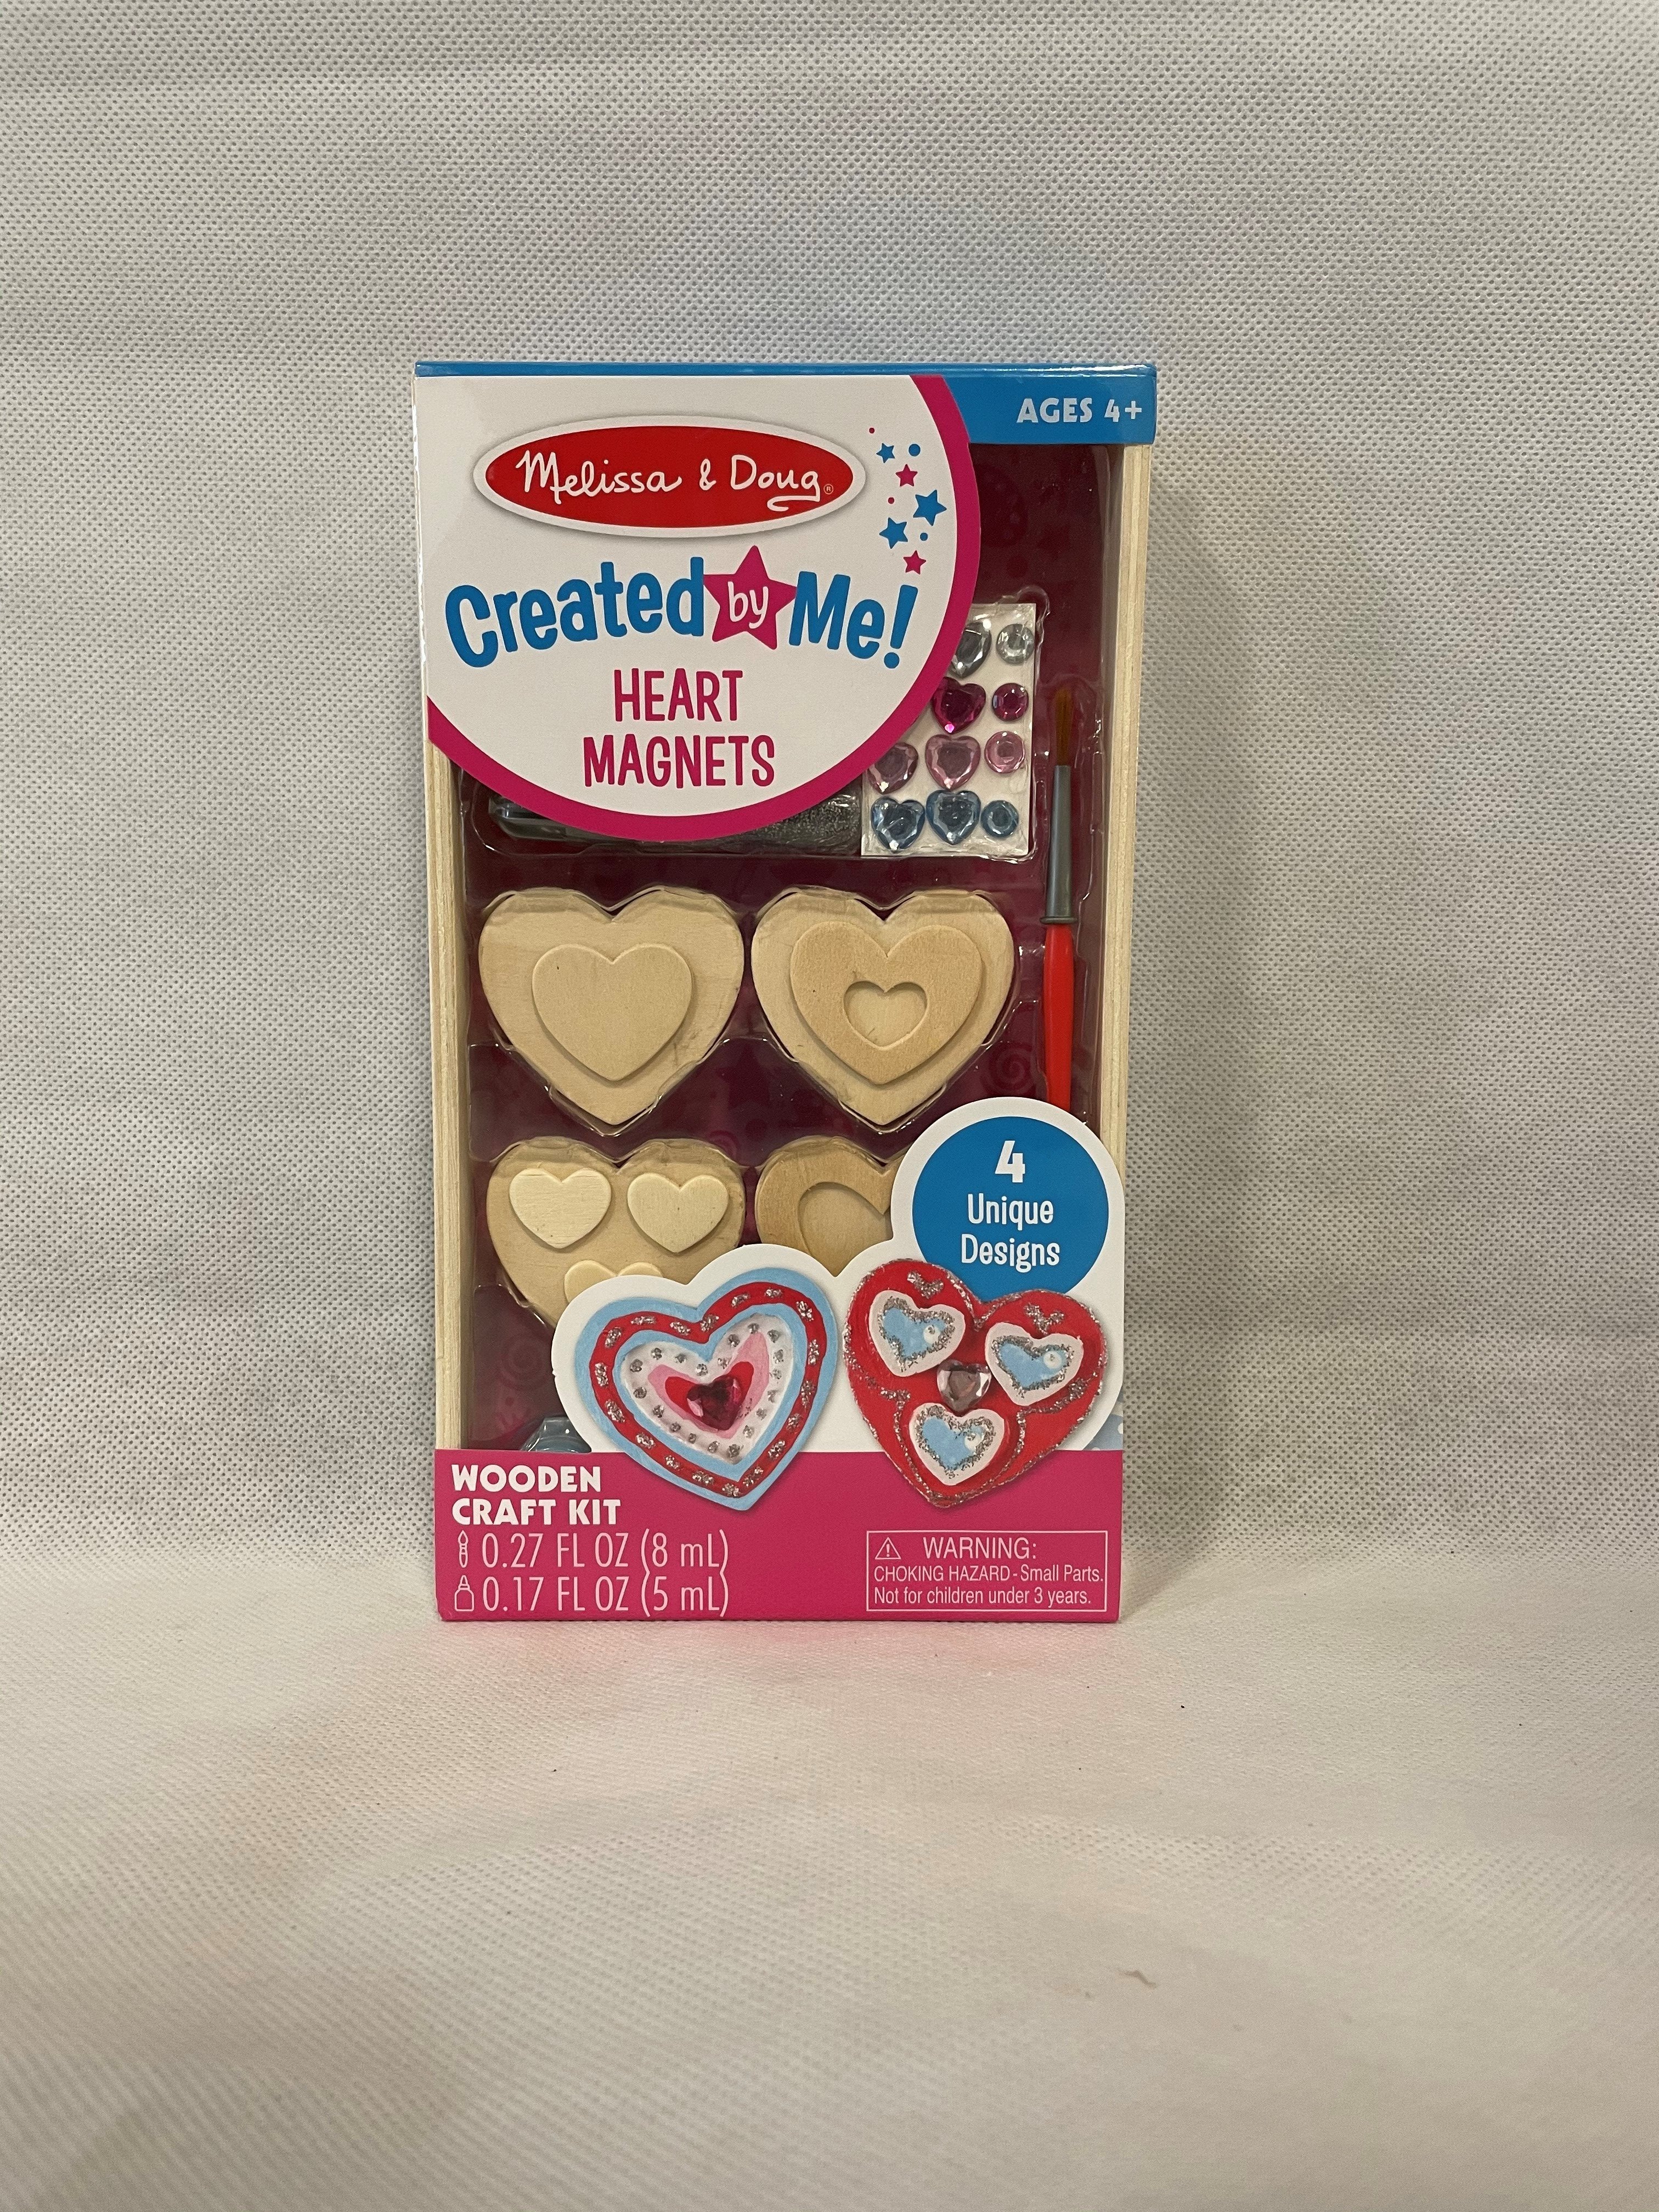 Heart Magnets – Garfield Park Conservatory Gift Shop